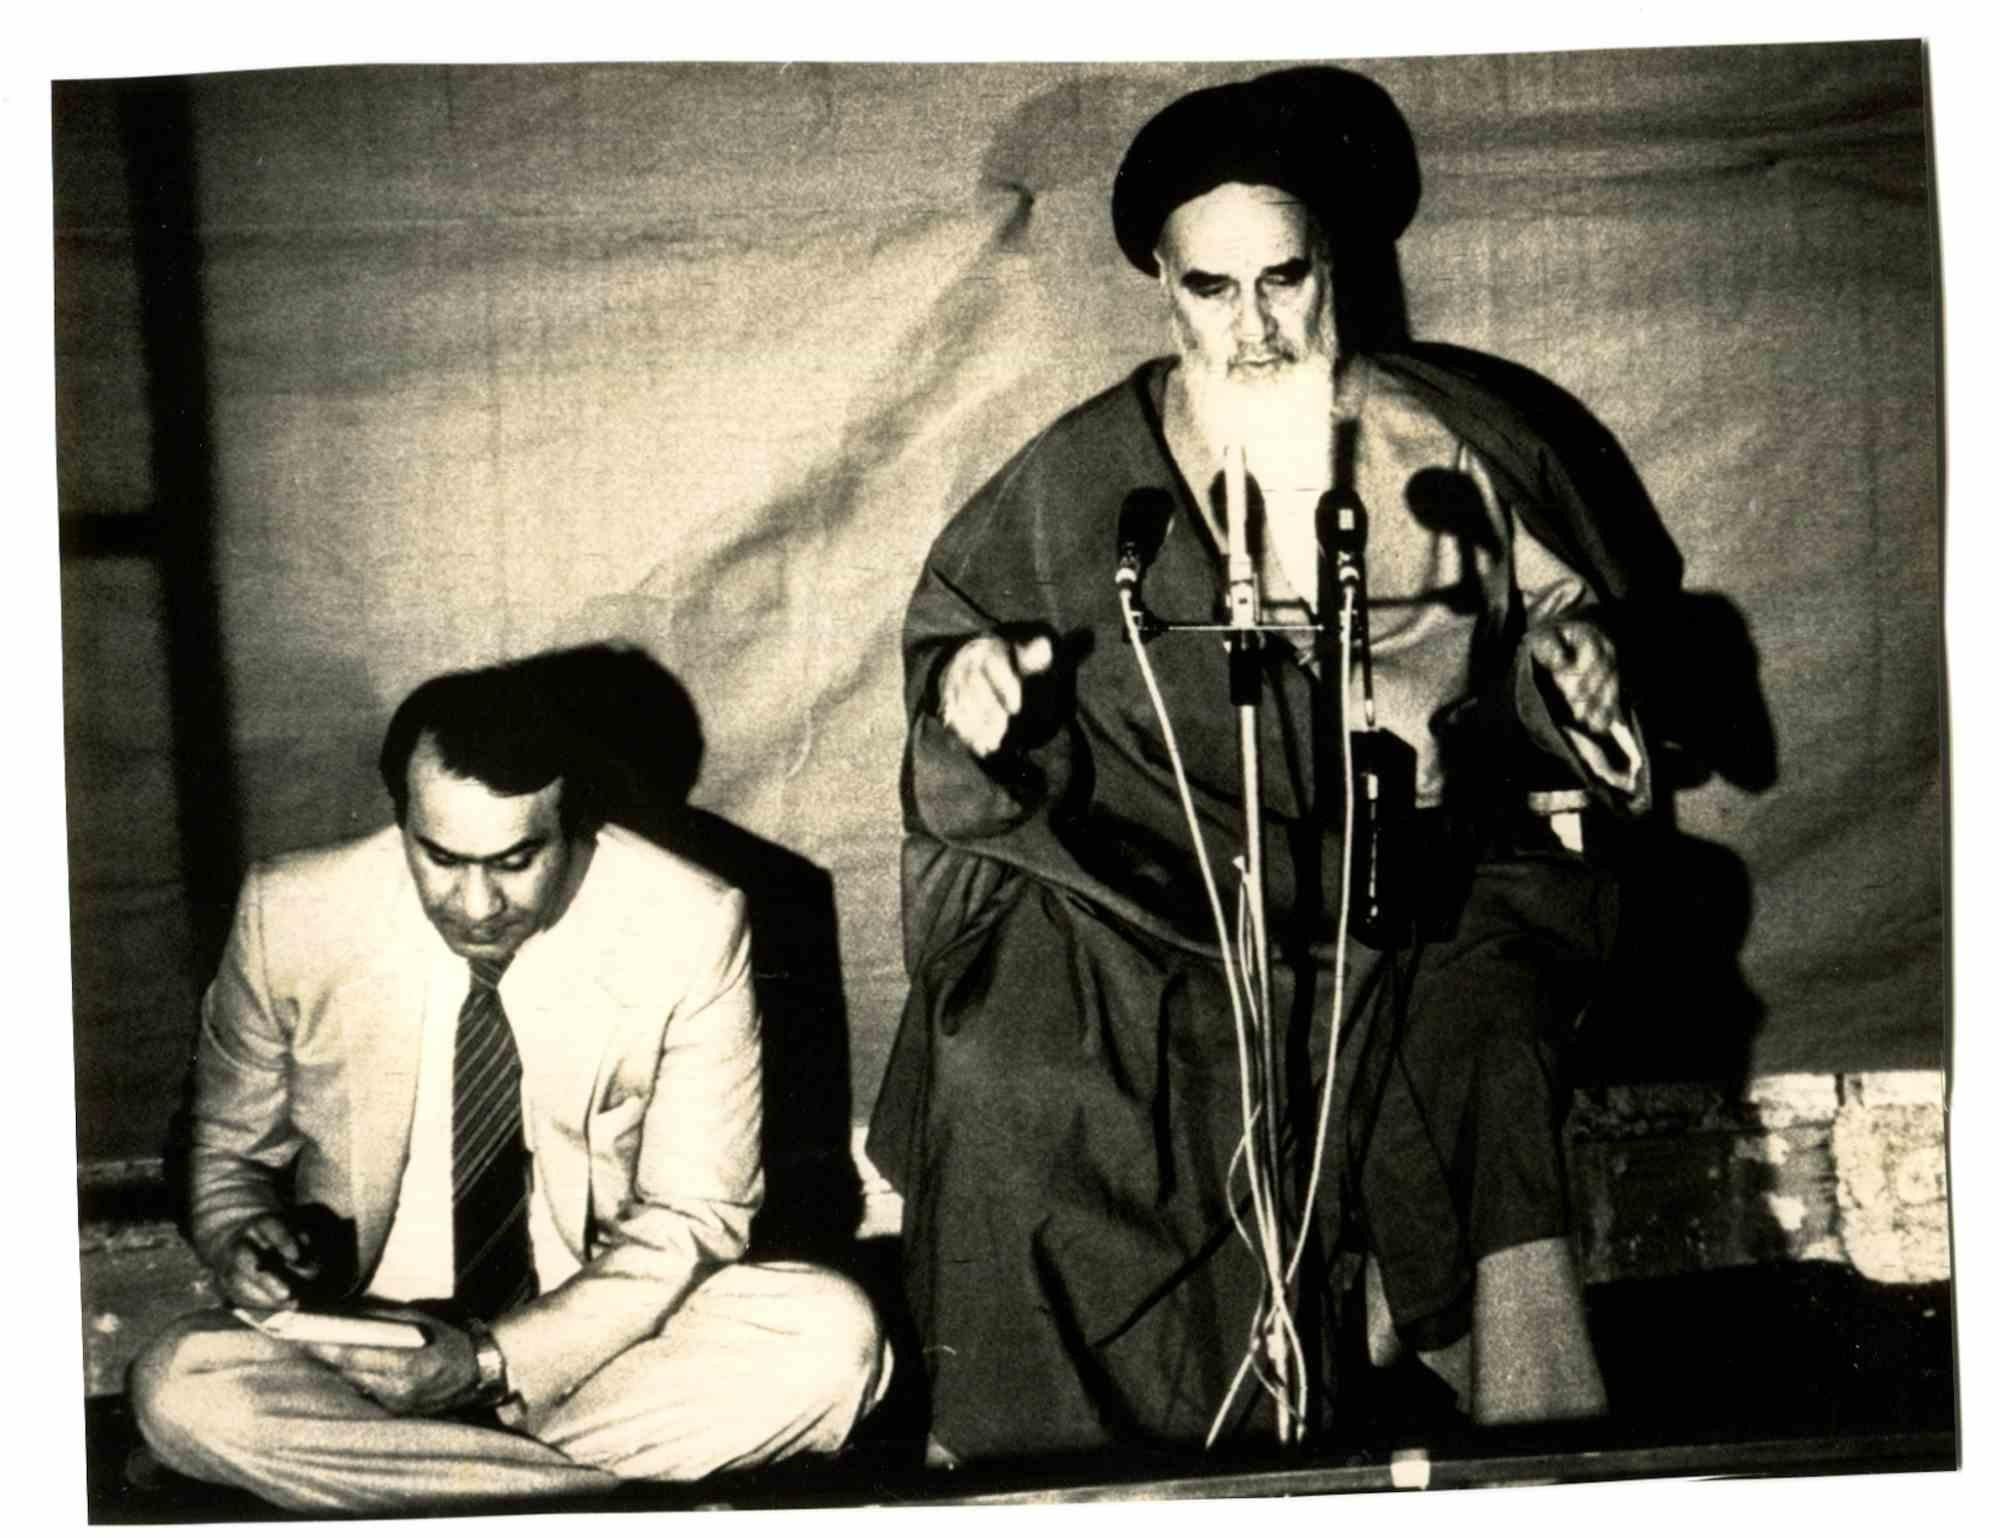 Ayatollah Khomeini - Photo vintage, années 1970